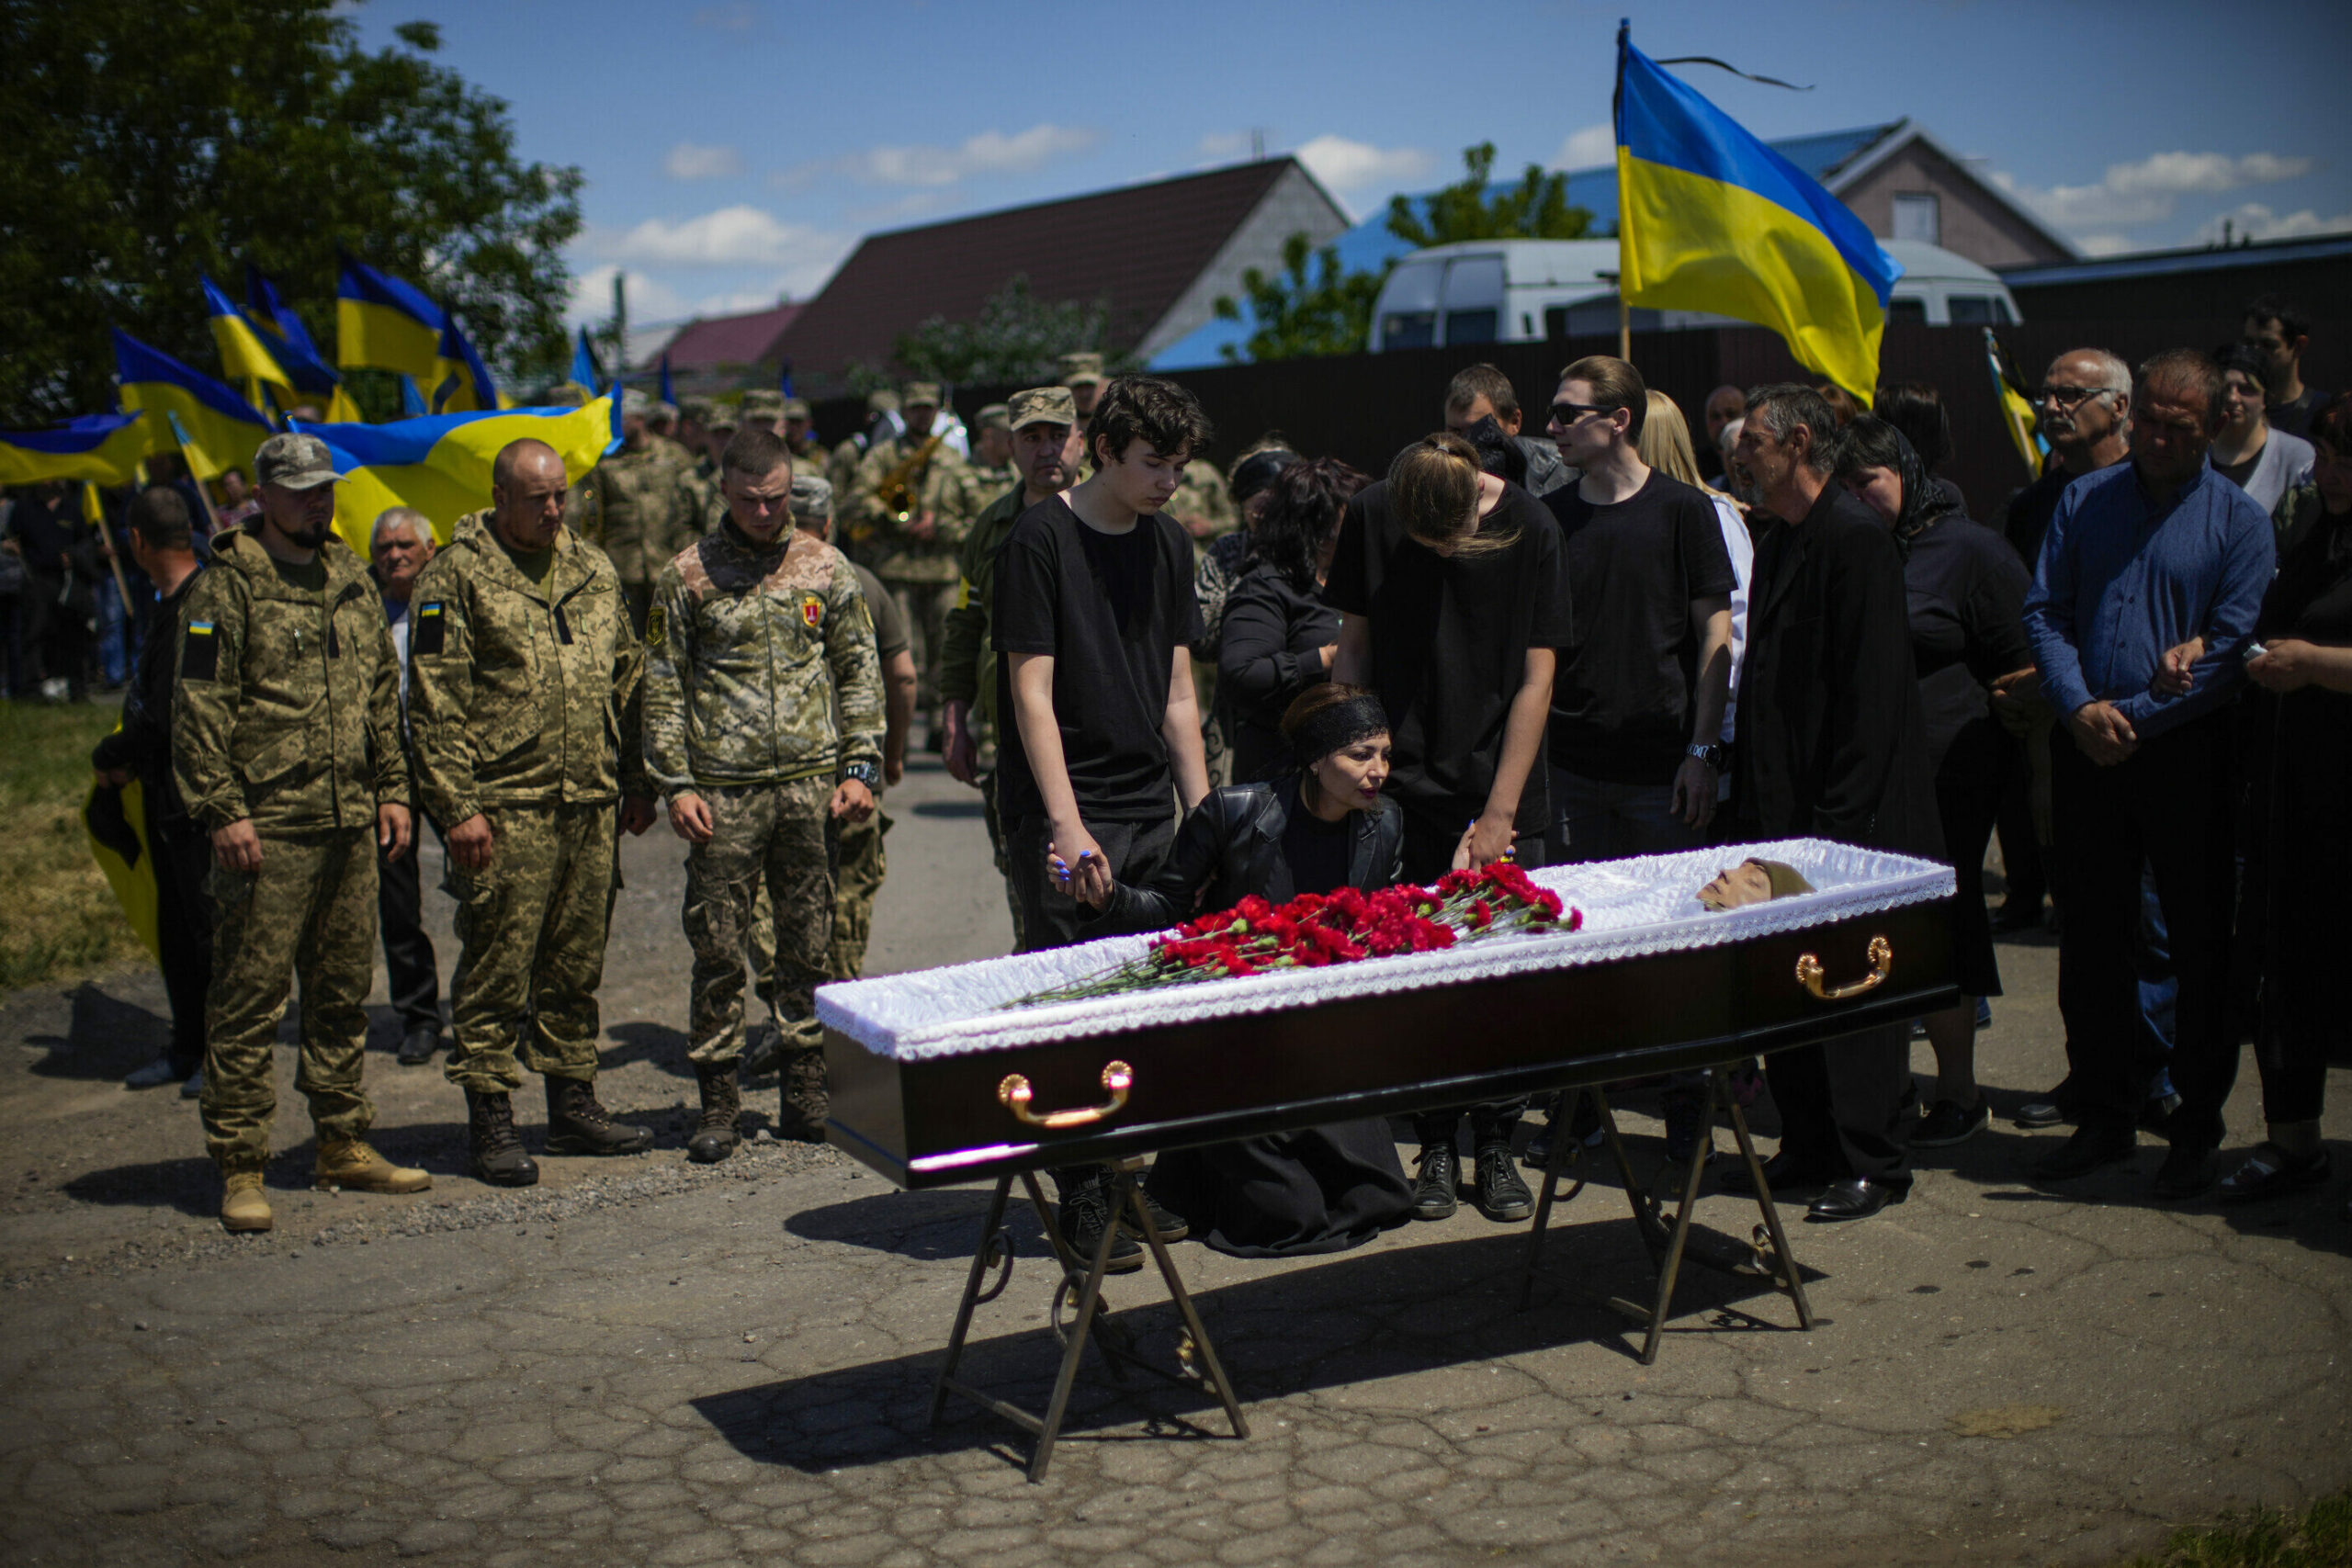 Czech volunteer found shot dead in Ukraine